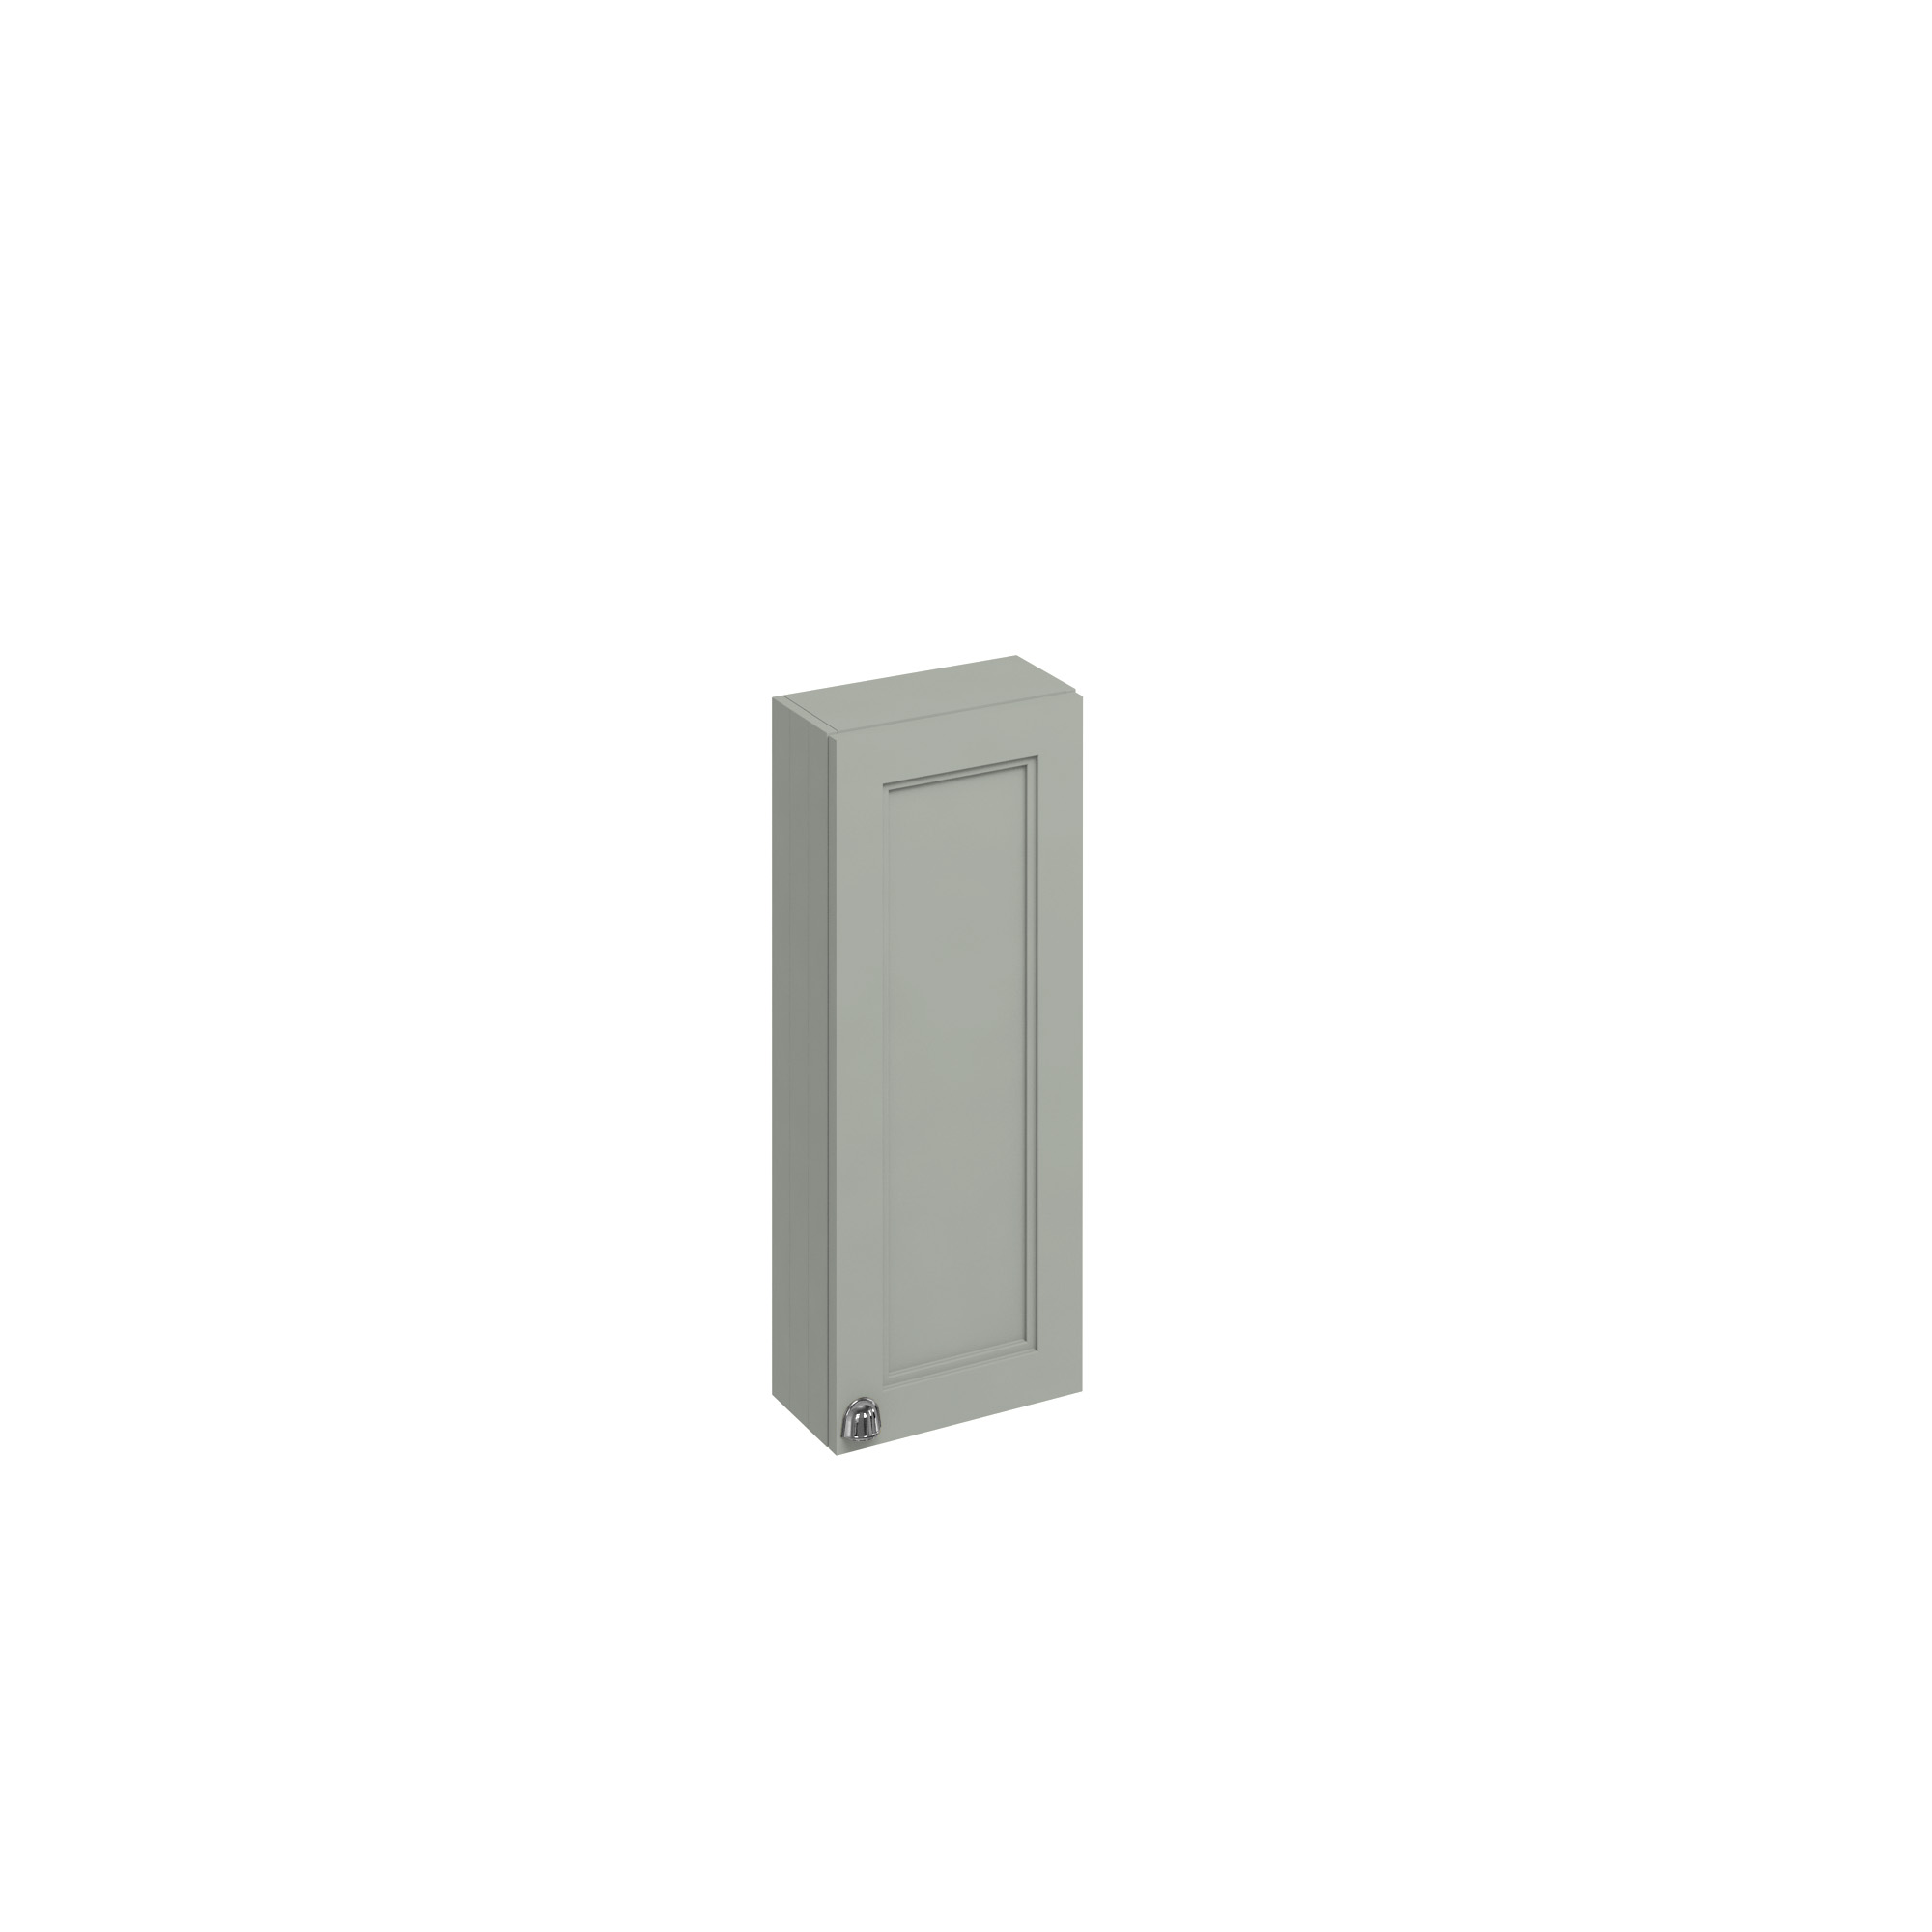 30 Single Door Wall Unit - Dark Olive